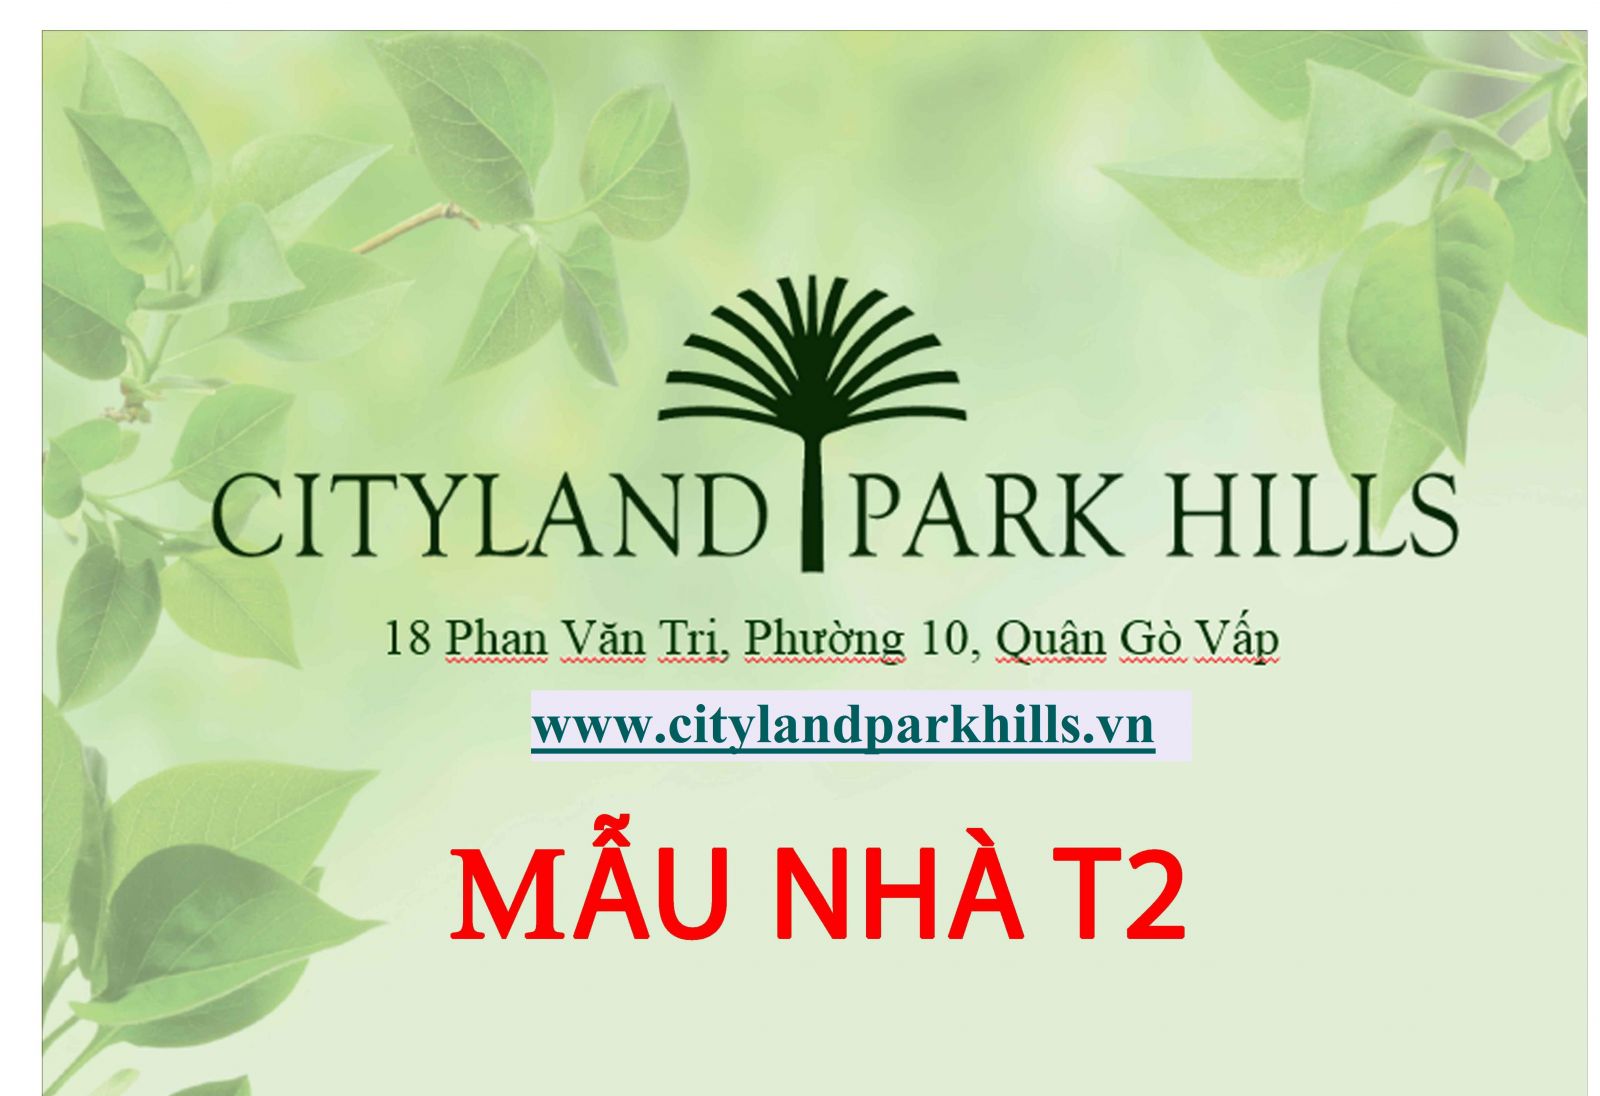 Cityland park hills nha pho T2